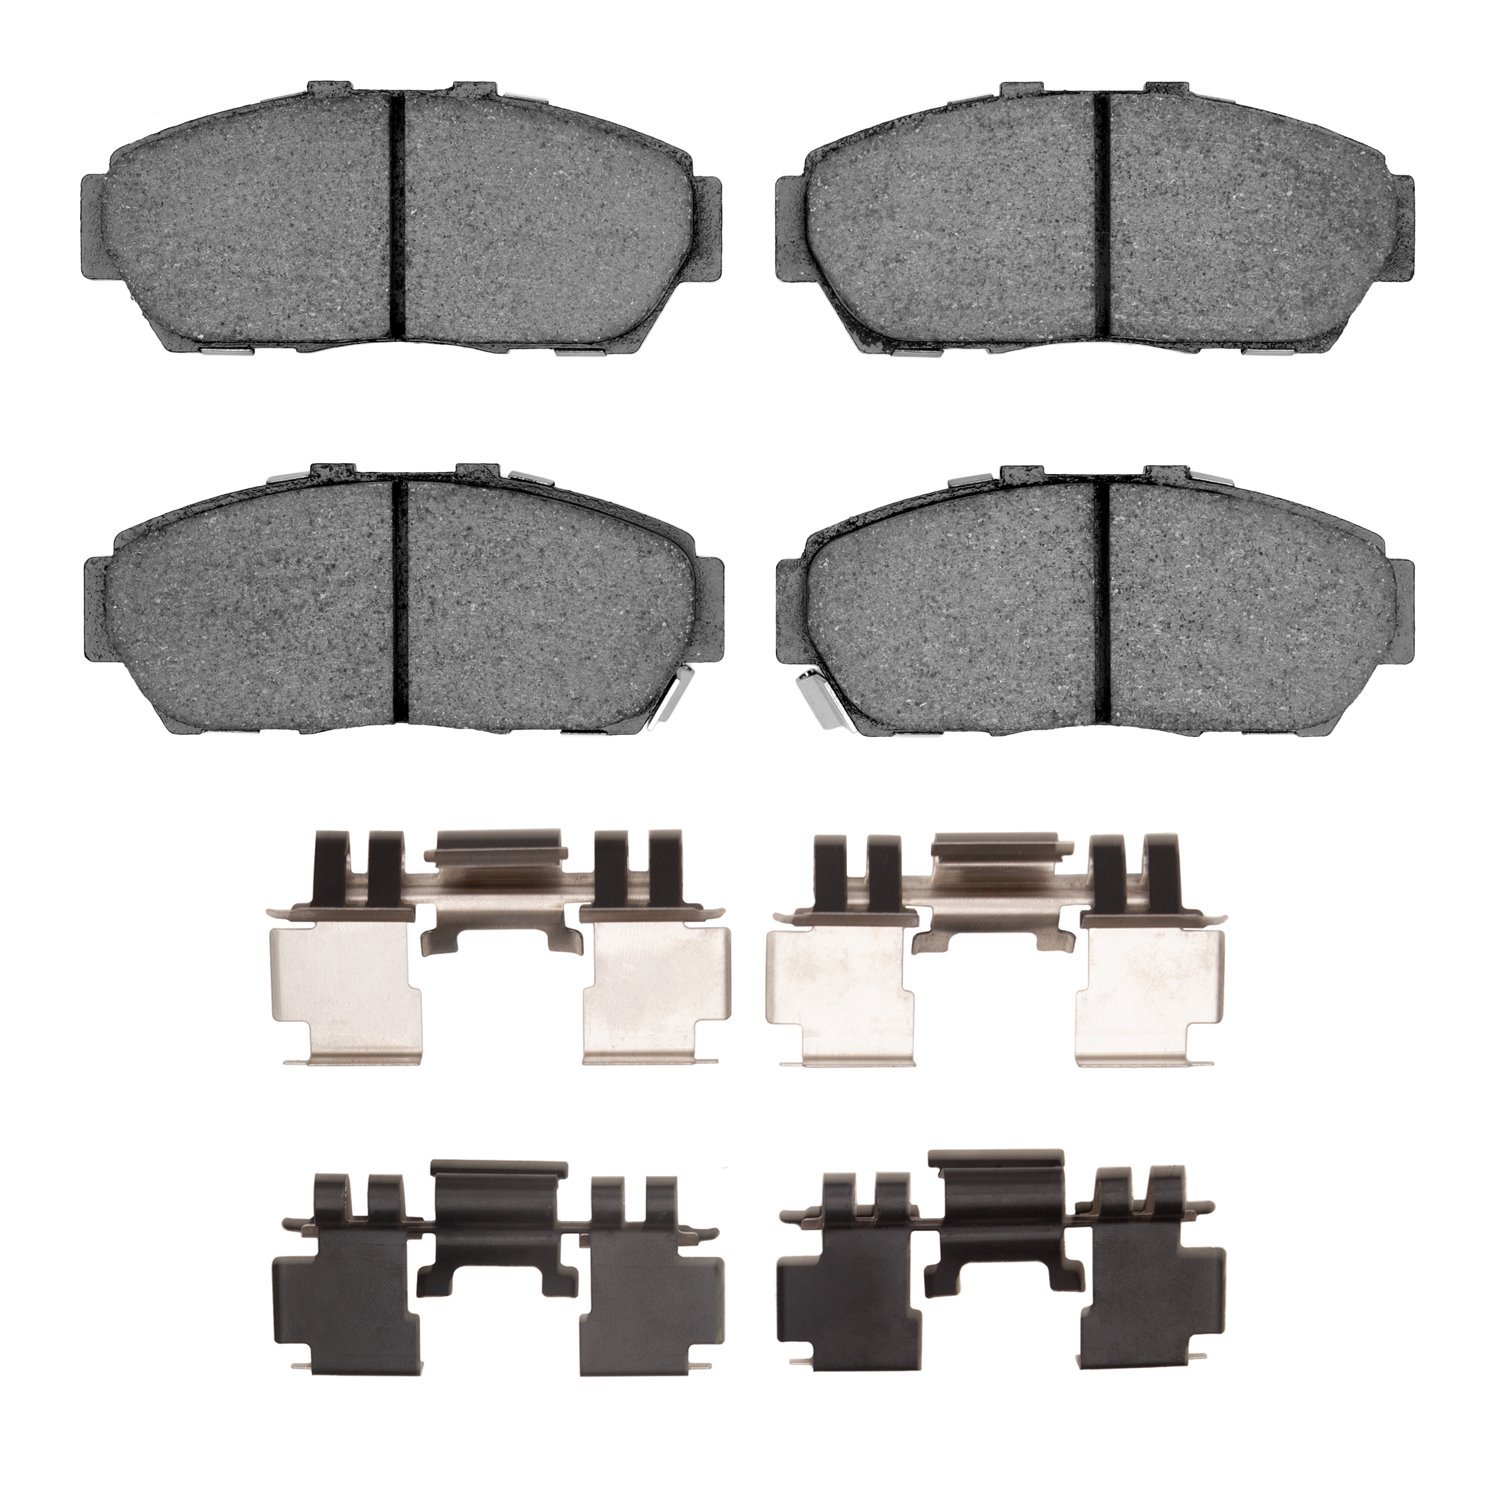 1310-0617-01 3000-Series Ceramic Brake Pads & Hardware Kit, 1993-2001 Acura/Honda, Position: Front